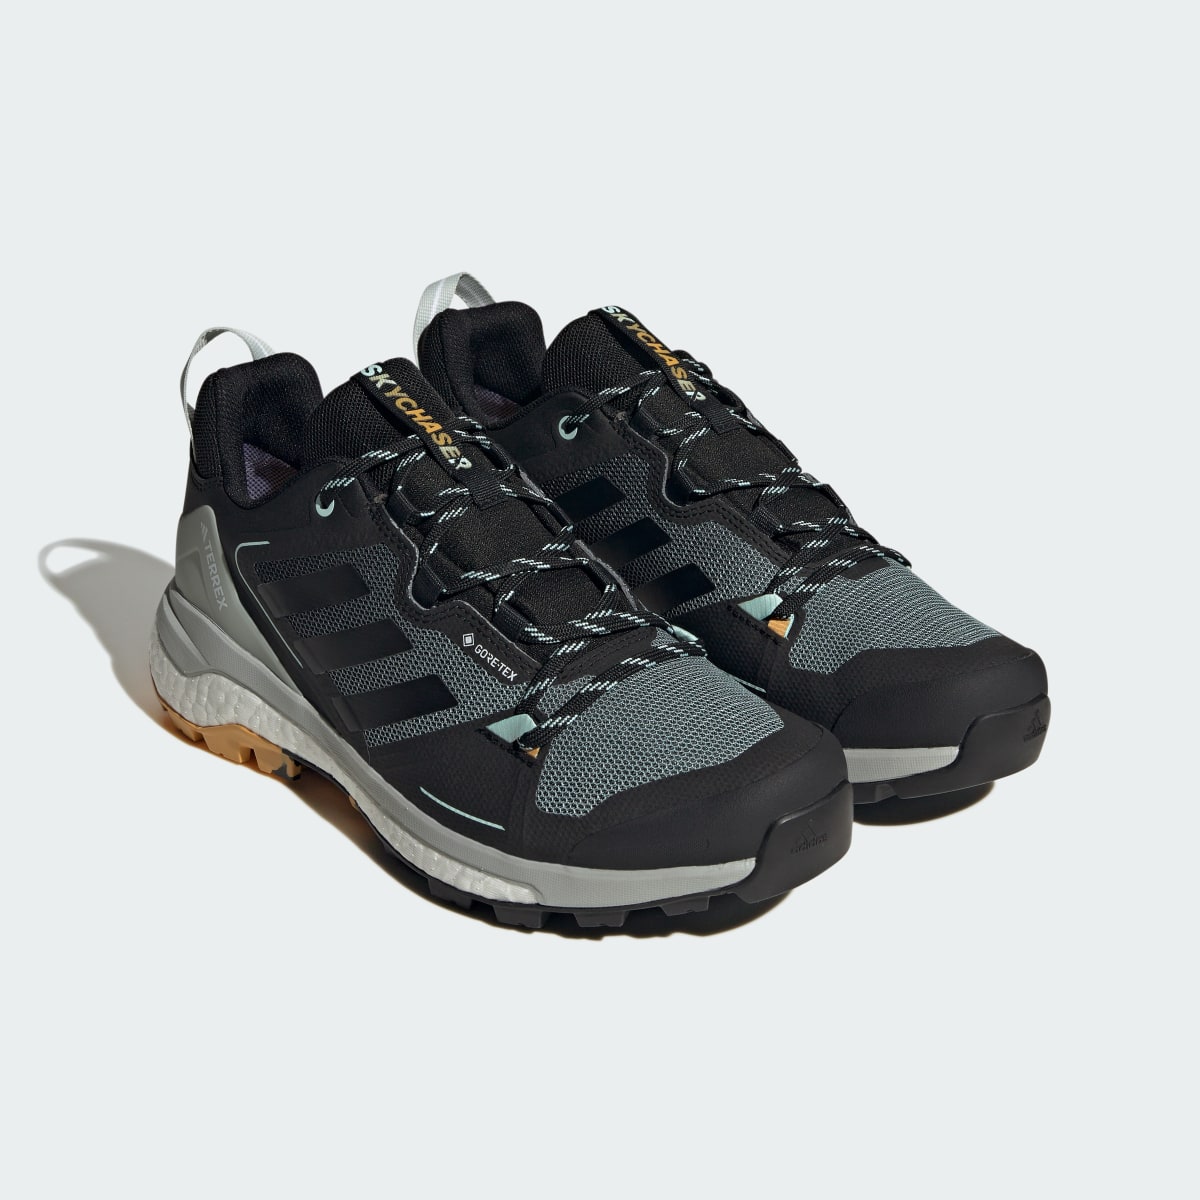 Adidas Terrex Skychaser GORE-TEX Hiking Shoes 2.0. 8